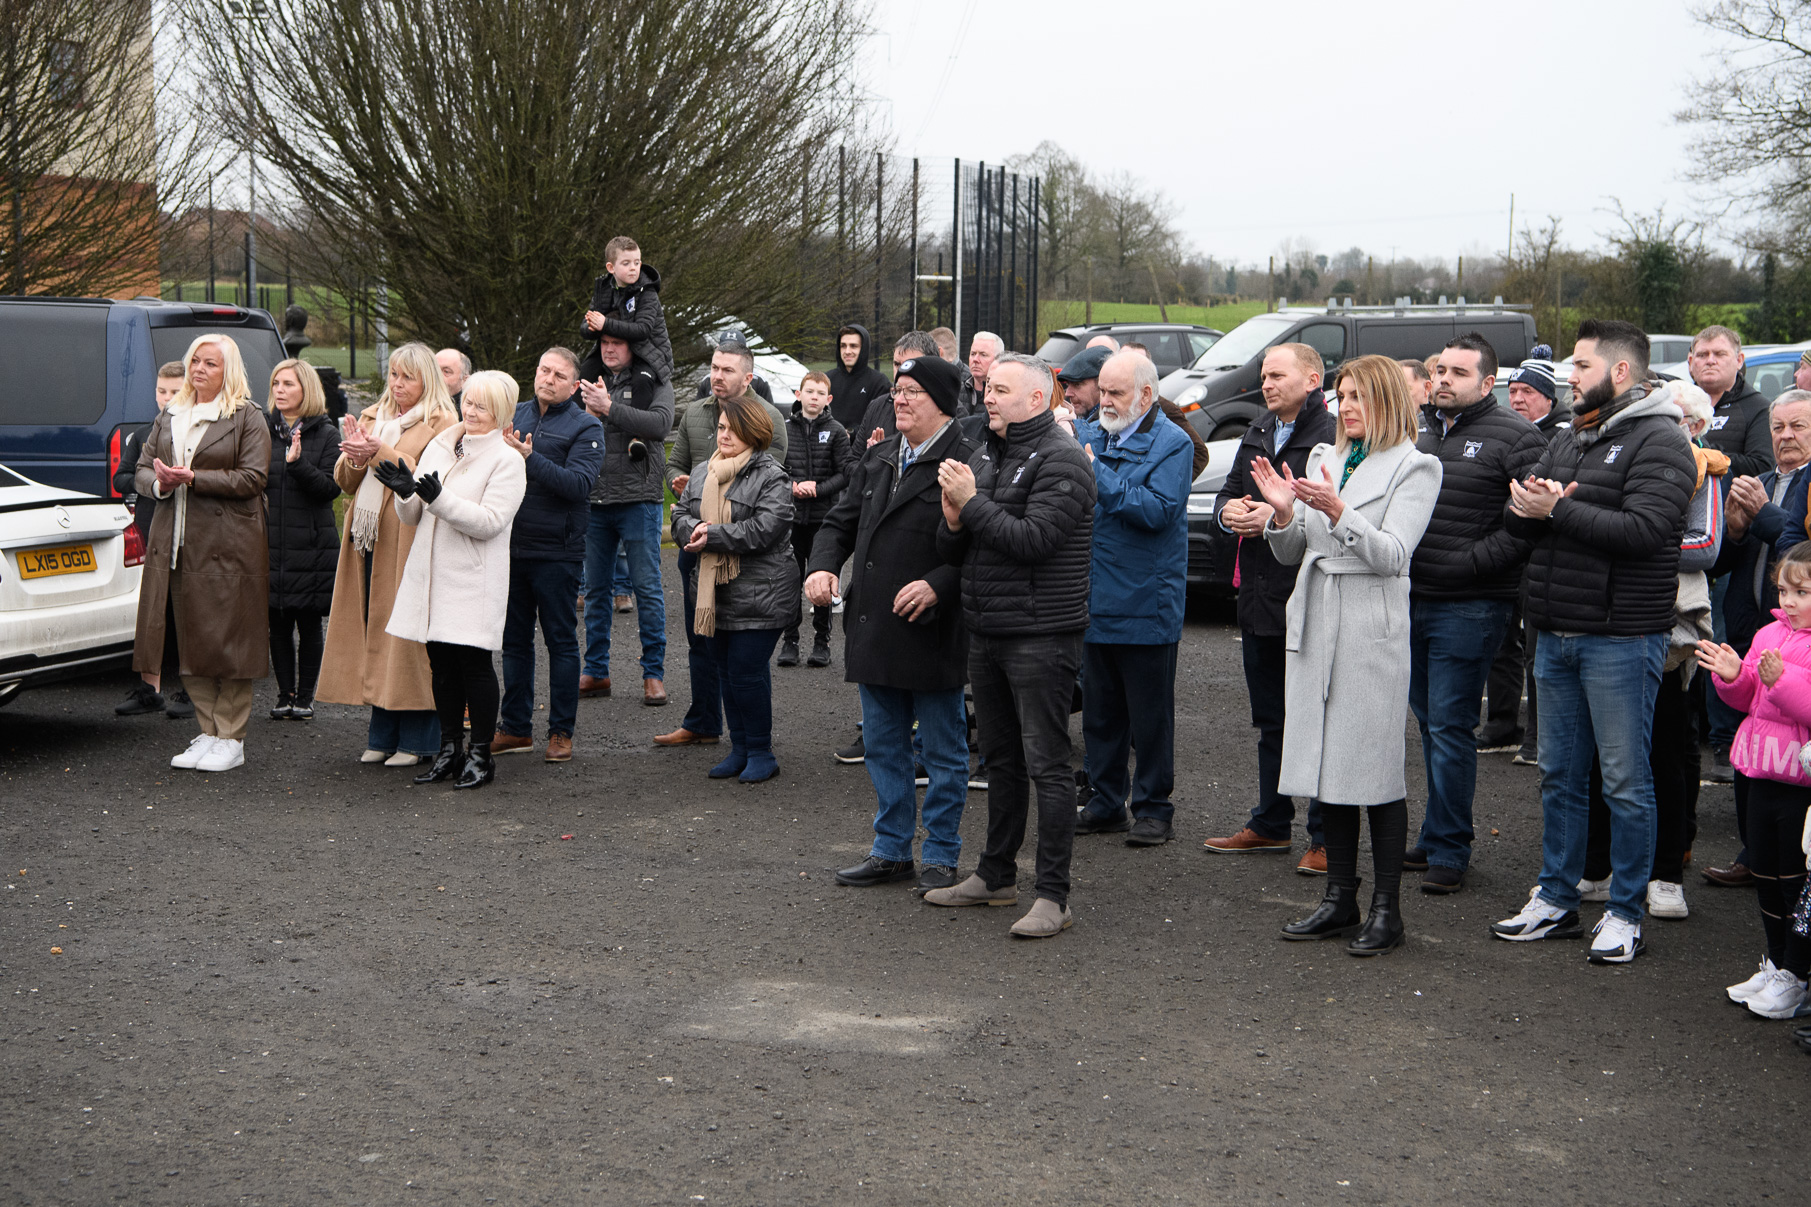 Clonoe GAA club unveils memorial to ‘fallen Gaels’